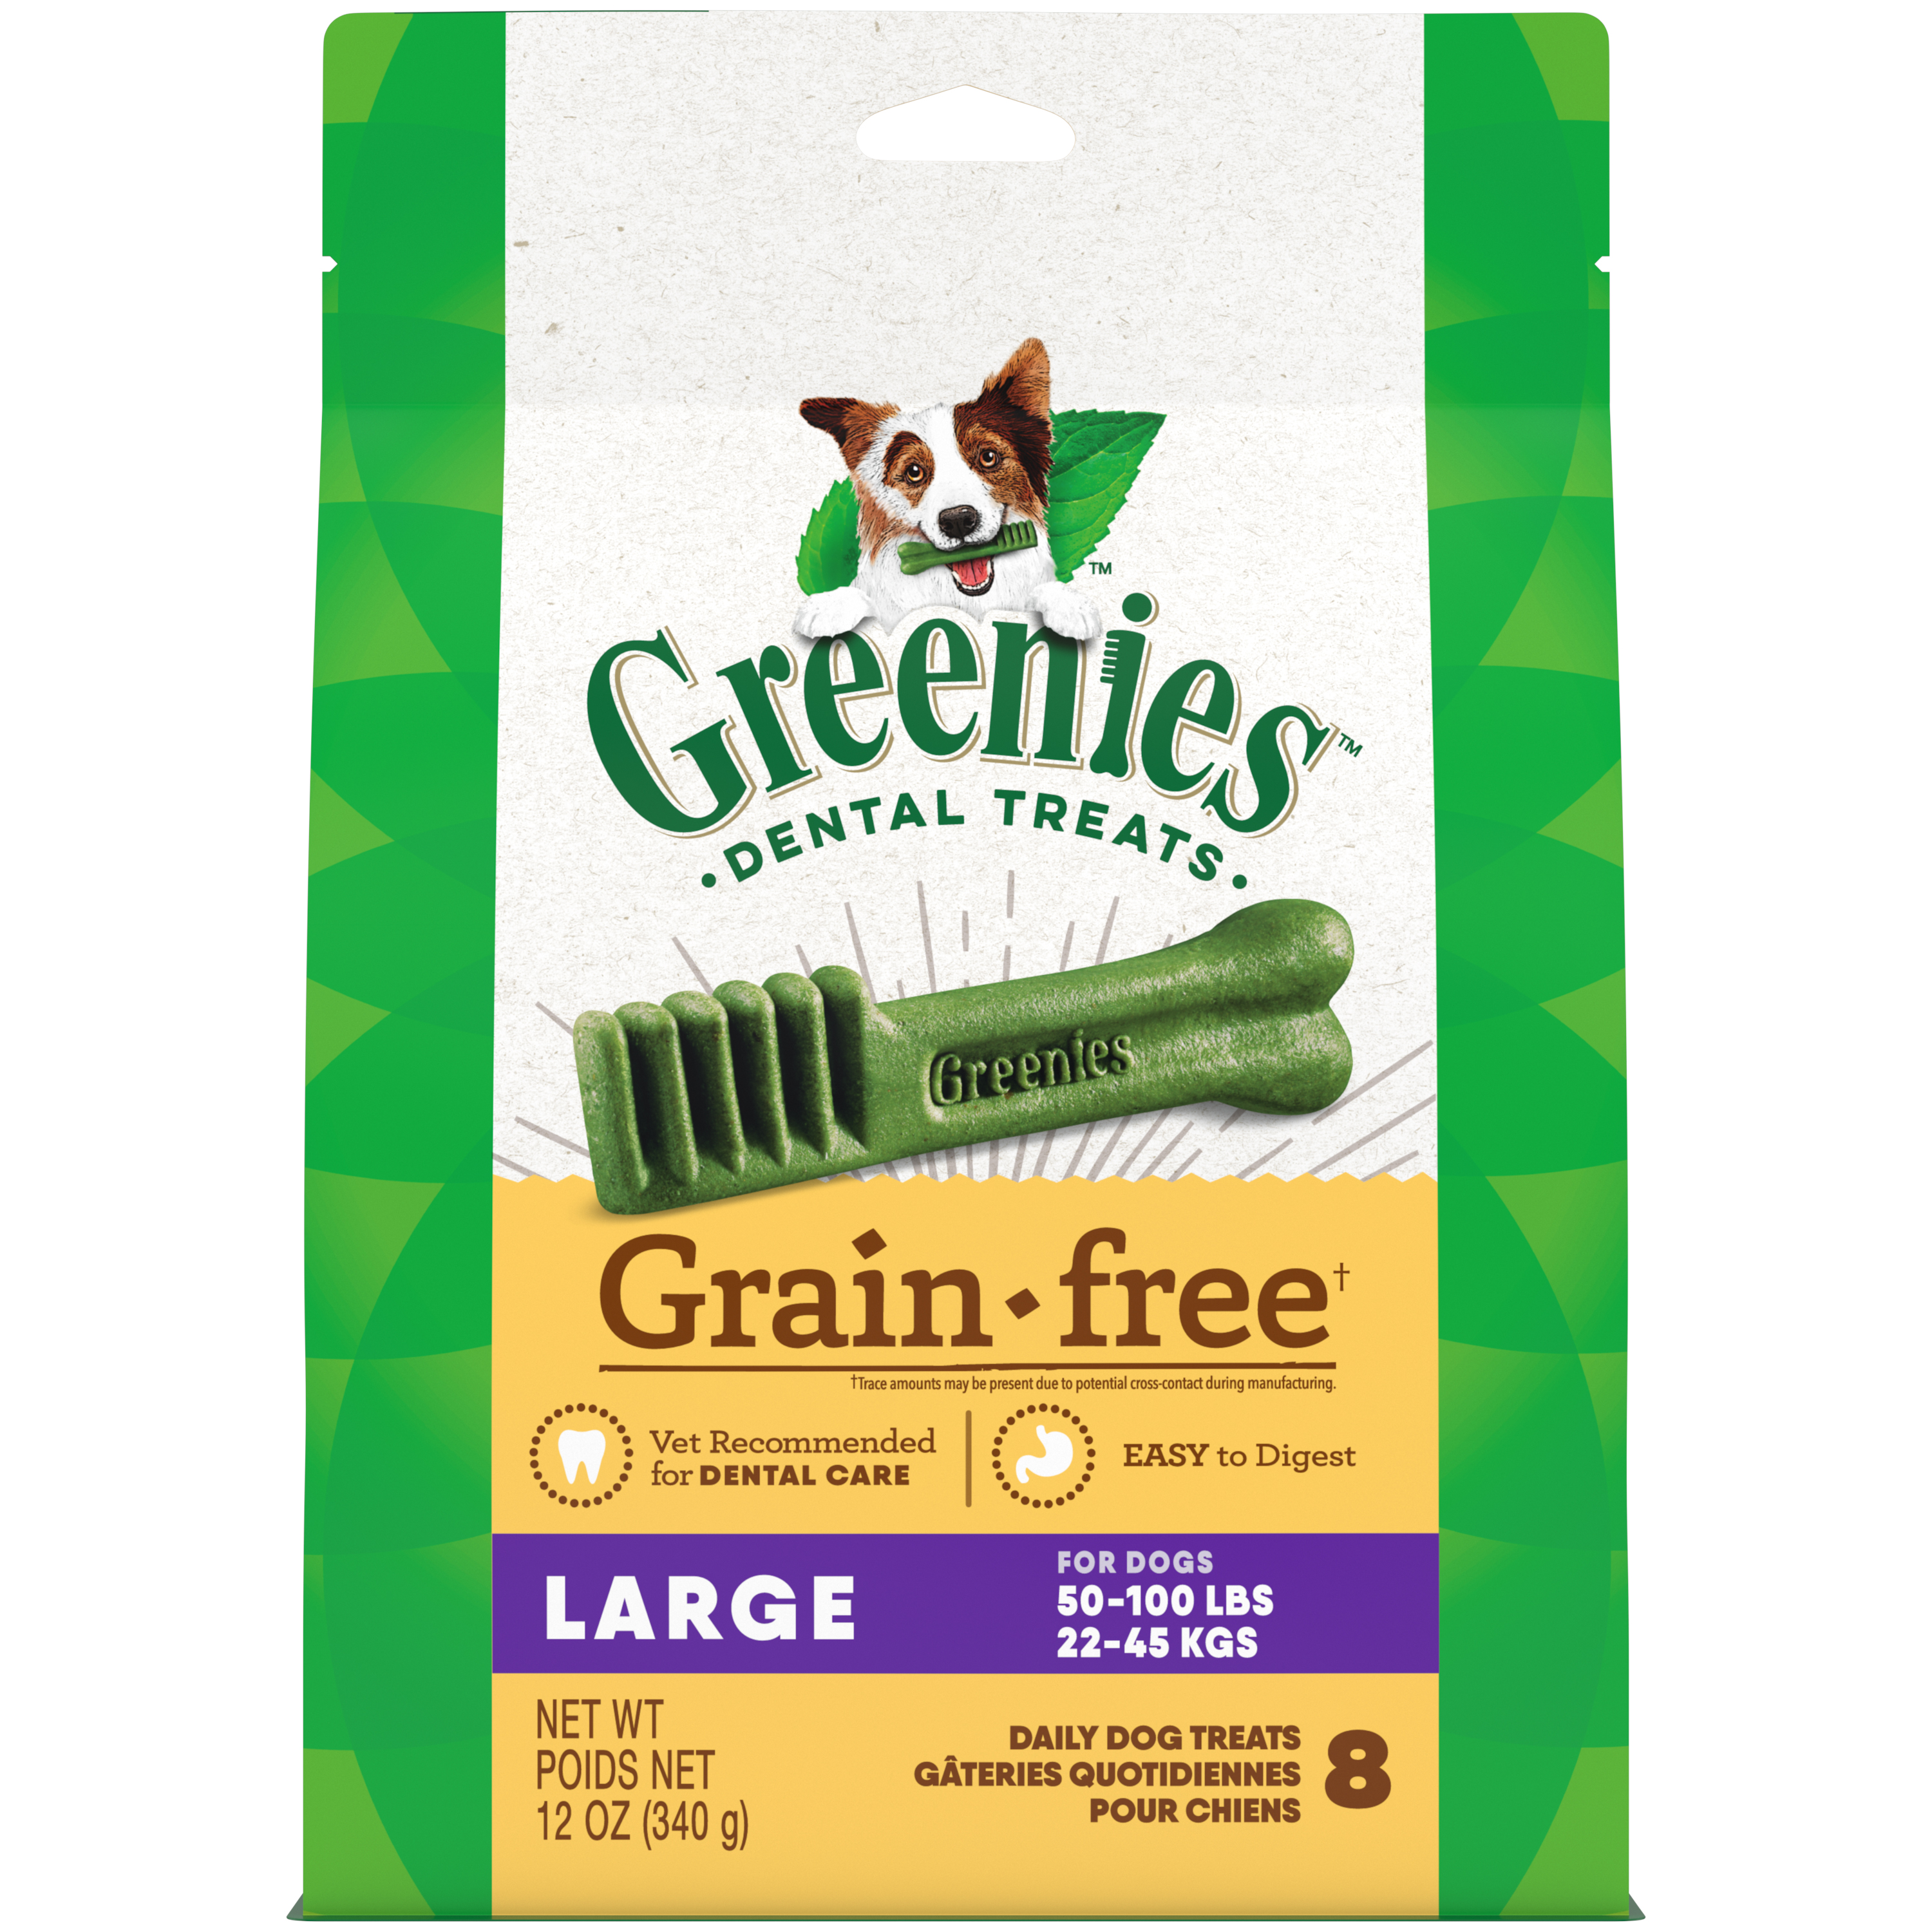 12 oz. Greenies Grain Free Large Treat Pack - Treats